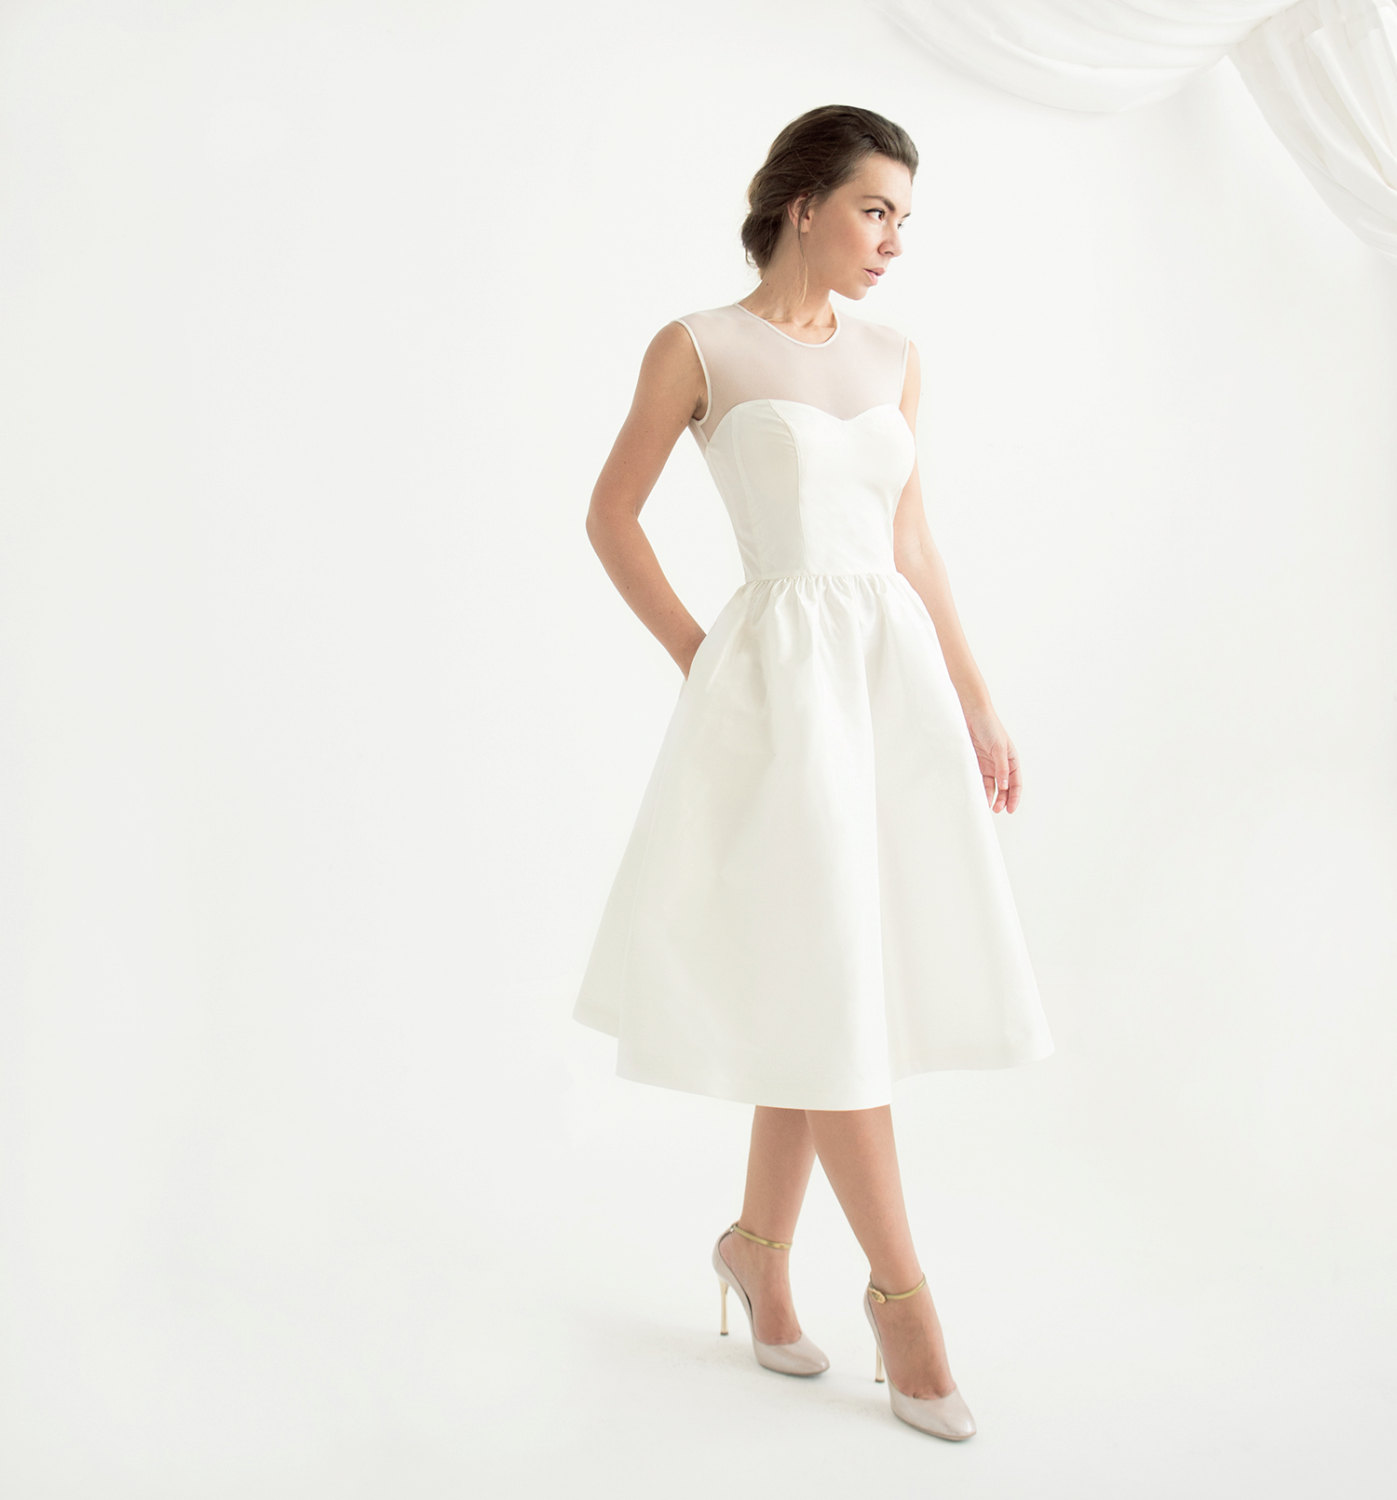 17 seriously stunning wedding dresses under $500 - HelloGigglesHelloGiggles